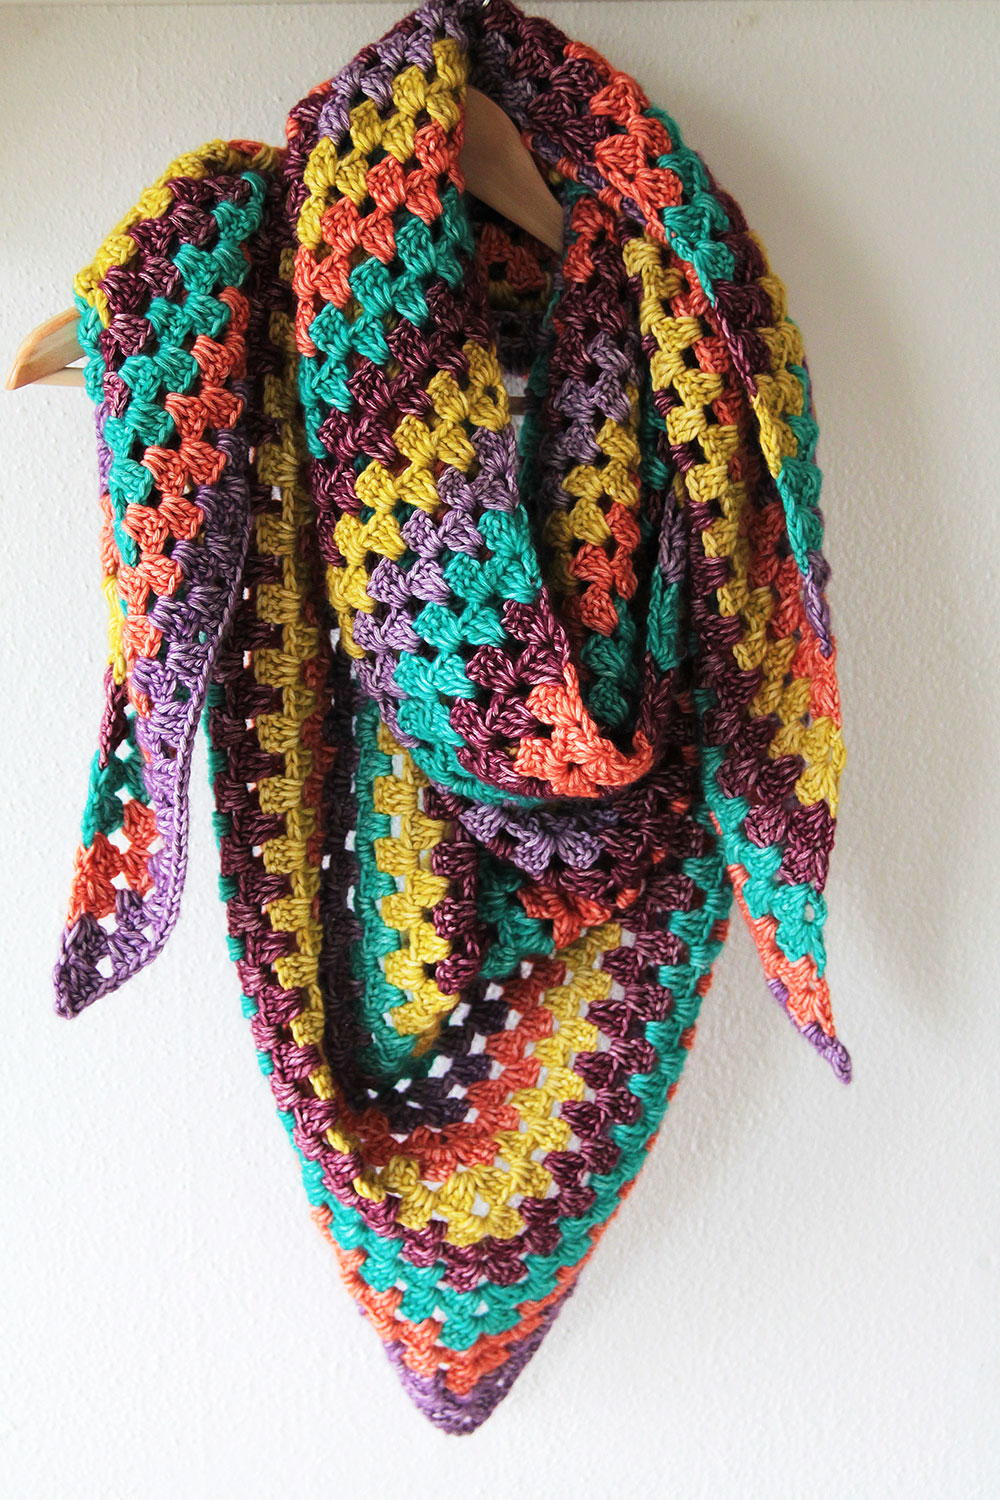 Granny Square Shawl Crochet Patterns Free